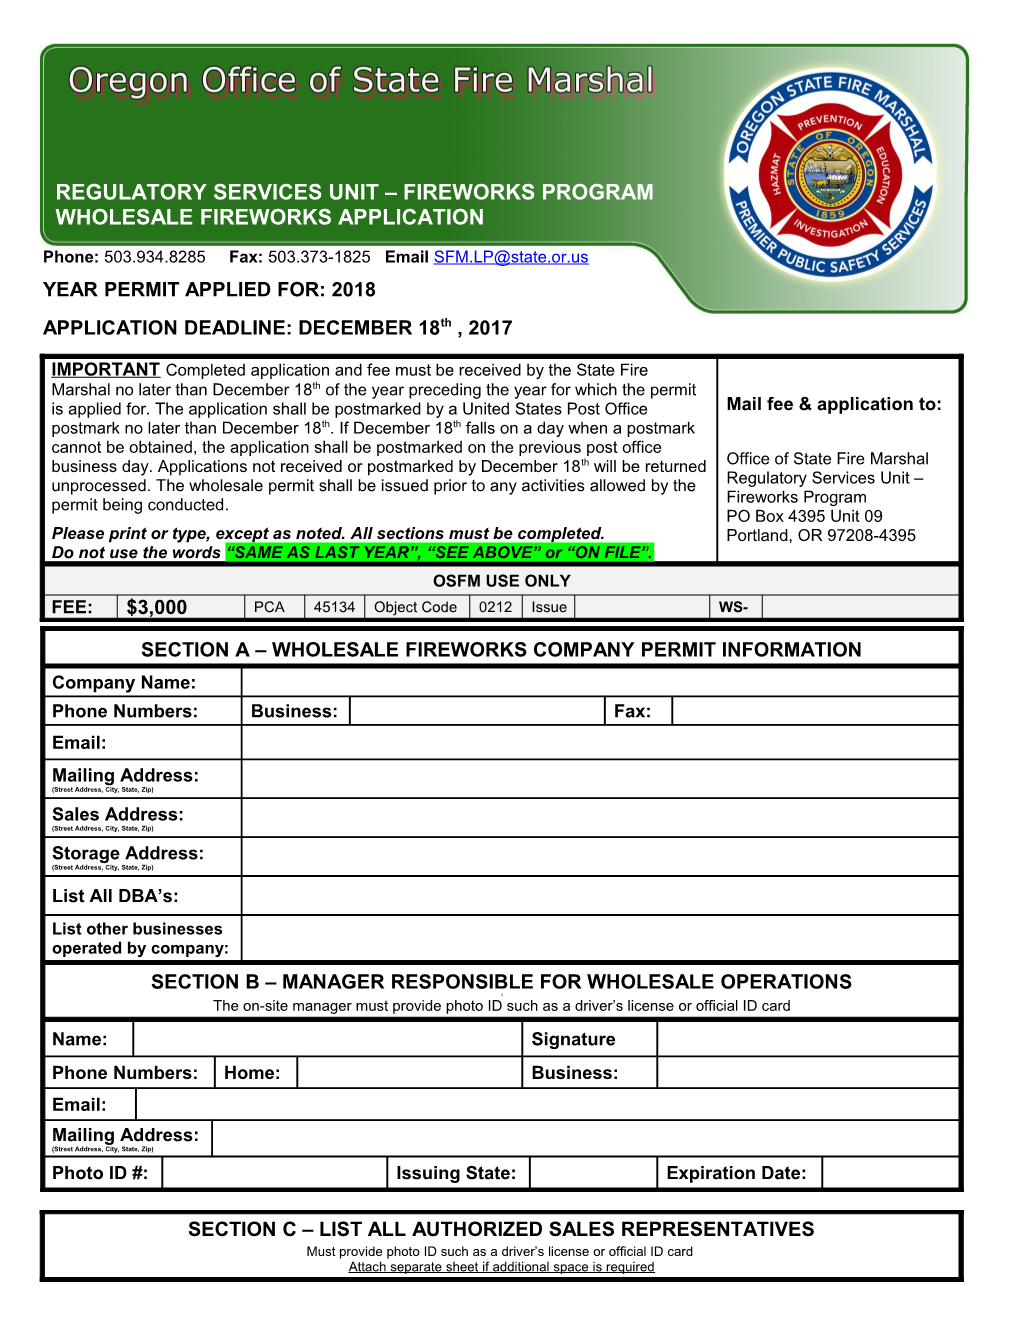 1994 Wholesale Pyrotechnics Permit Application	831-124 $